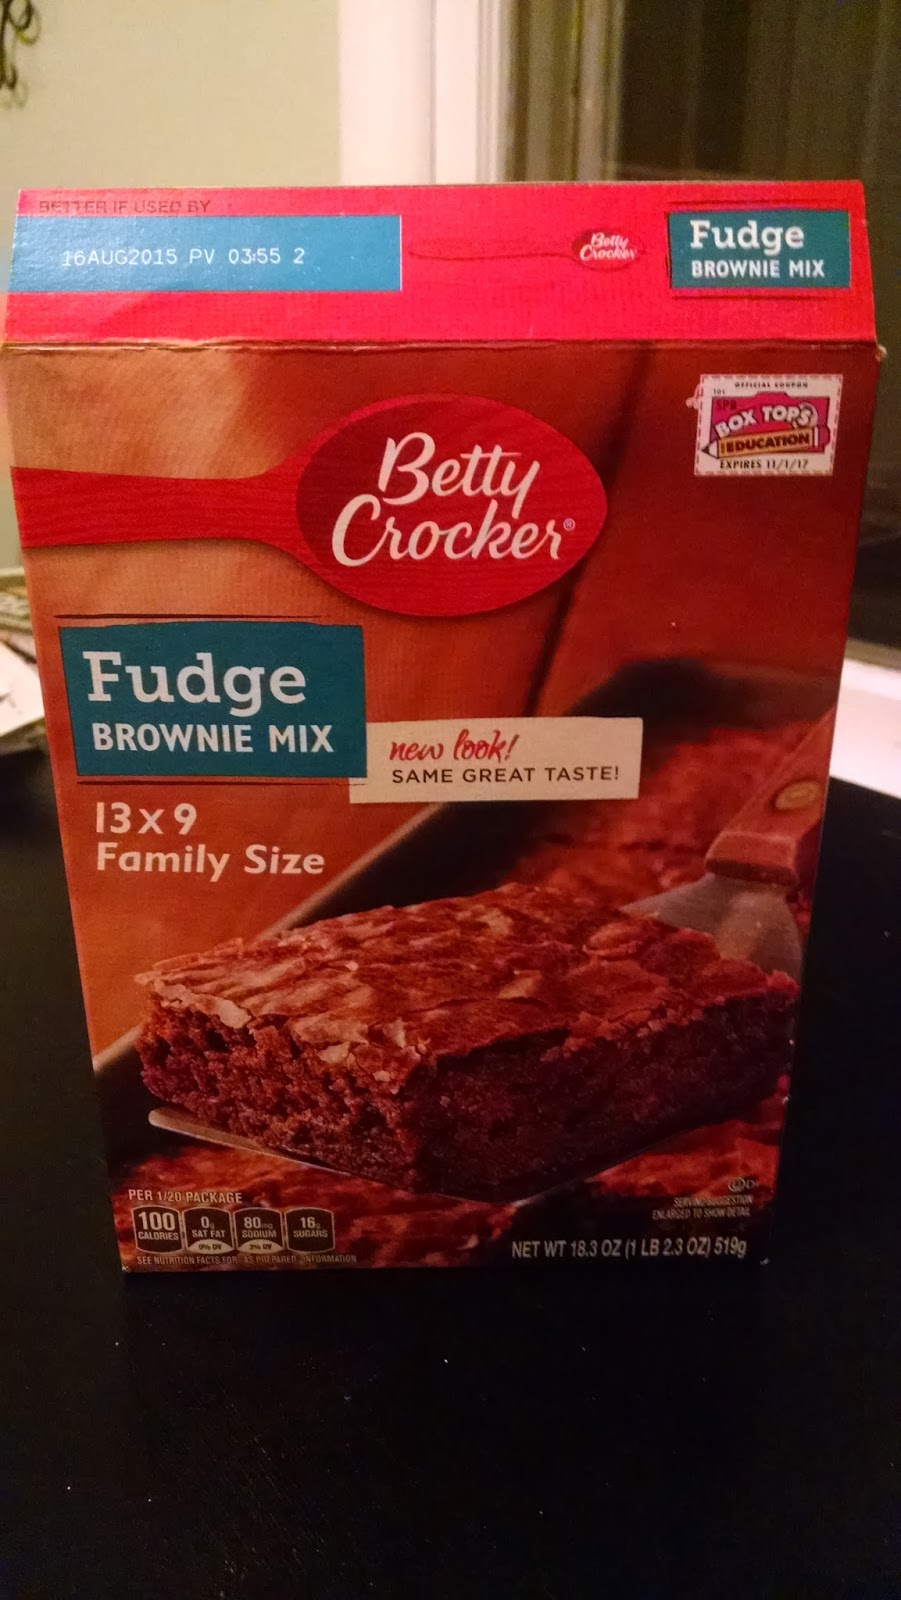 Betty Crocker Fudge Brownie Mix Family Size 18.3oz. (Pack of 4)